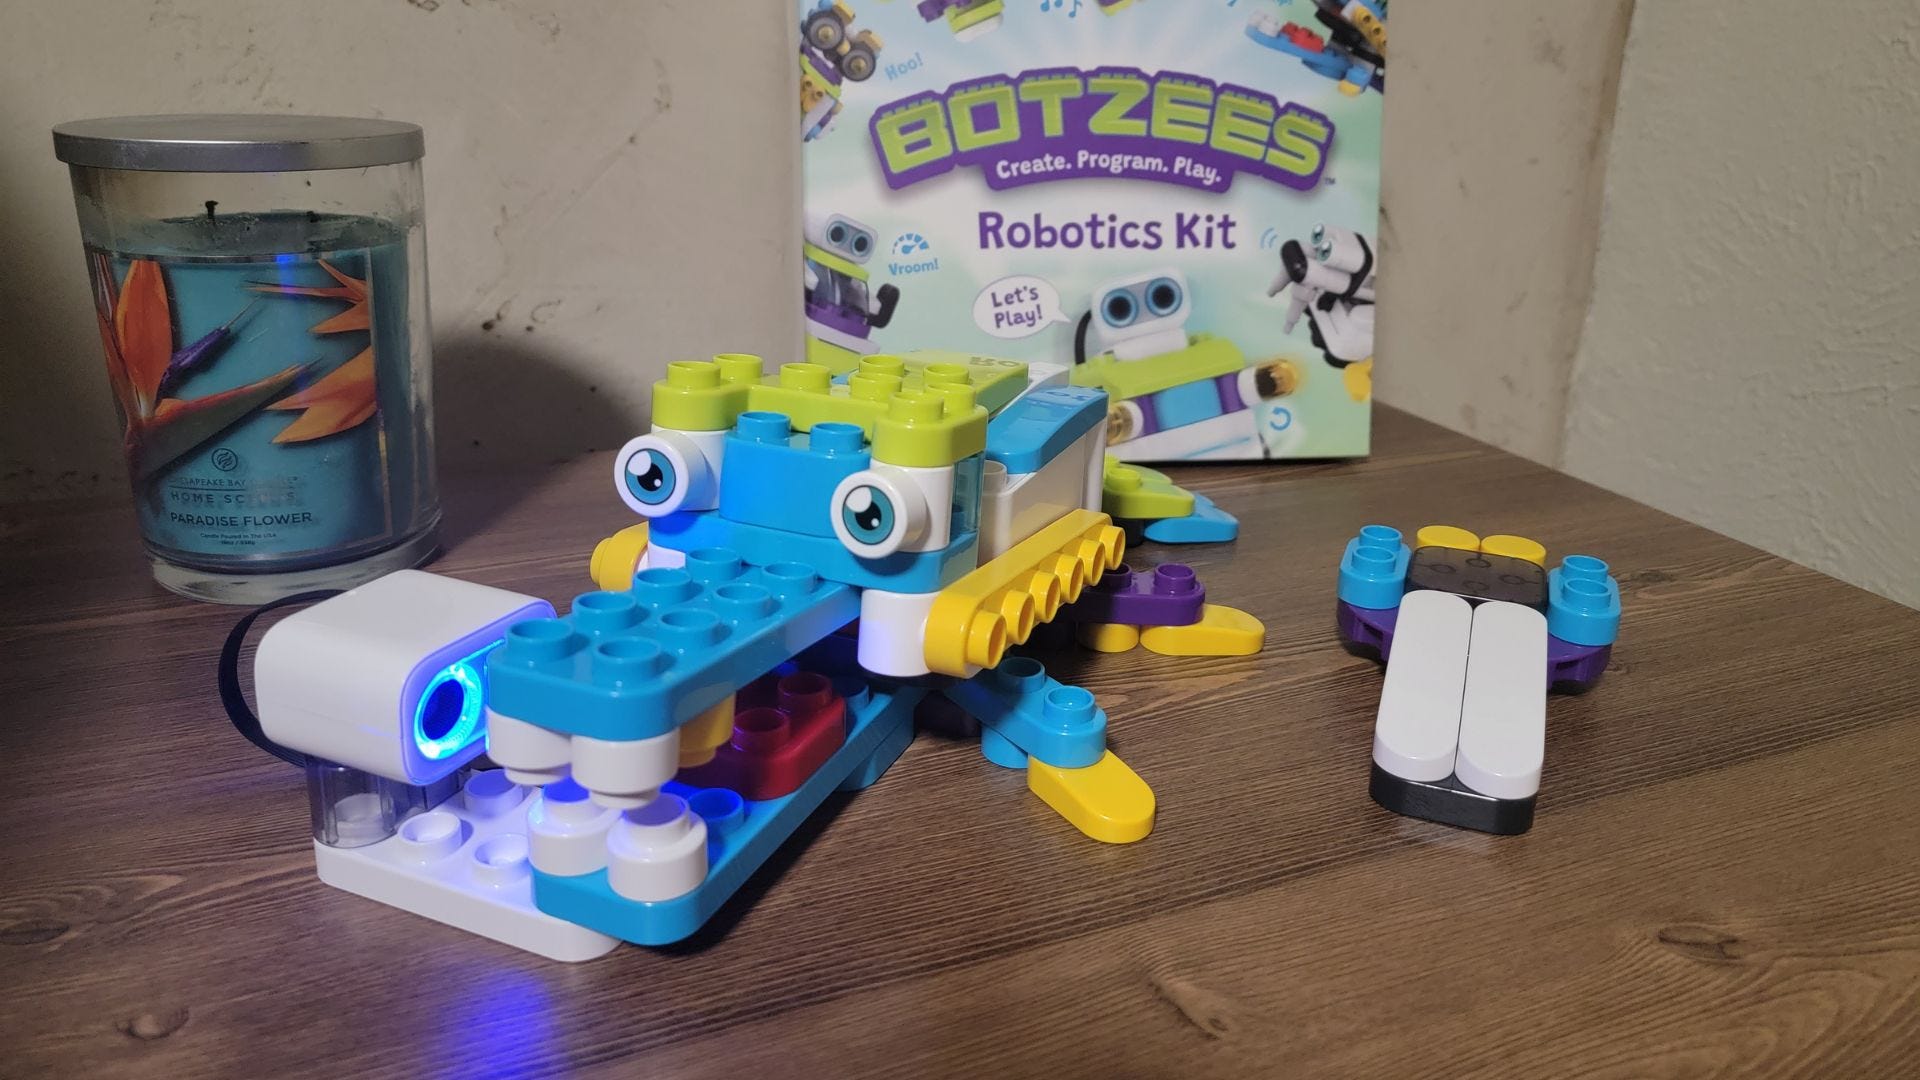 Didi the crocodile build of Botzees robotics kit